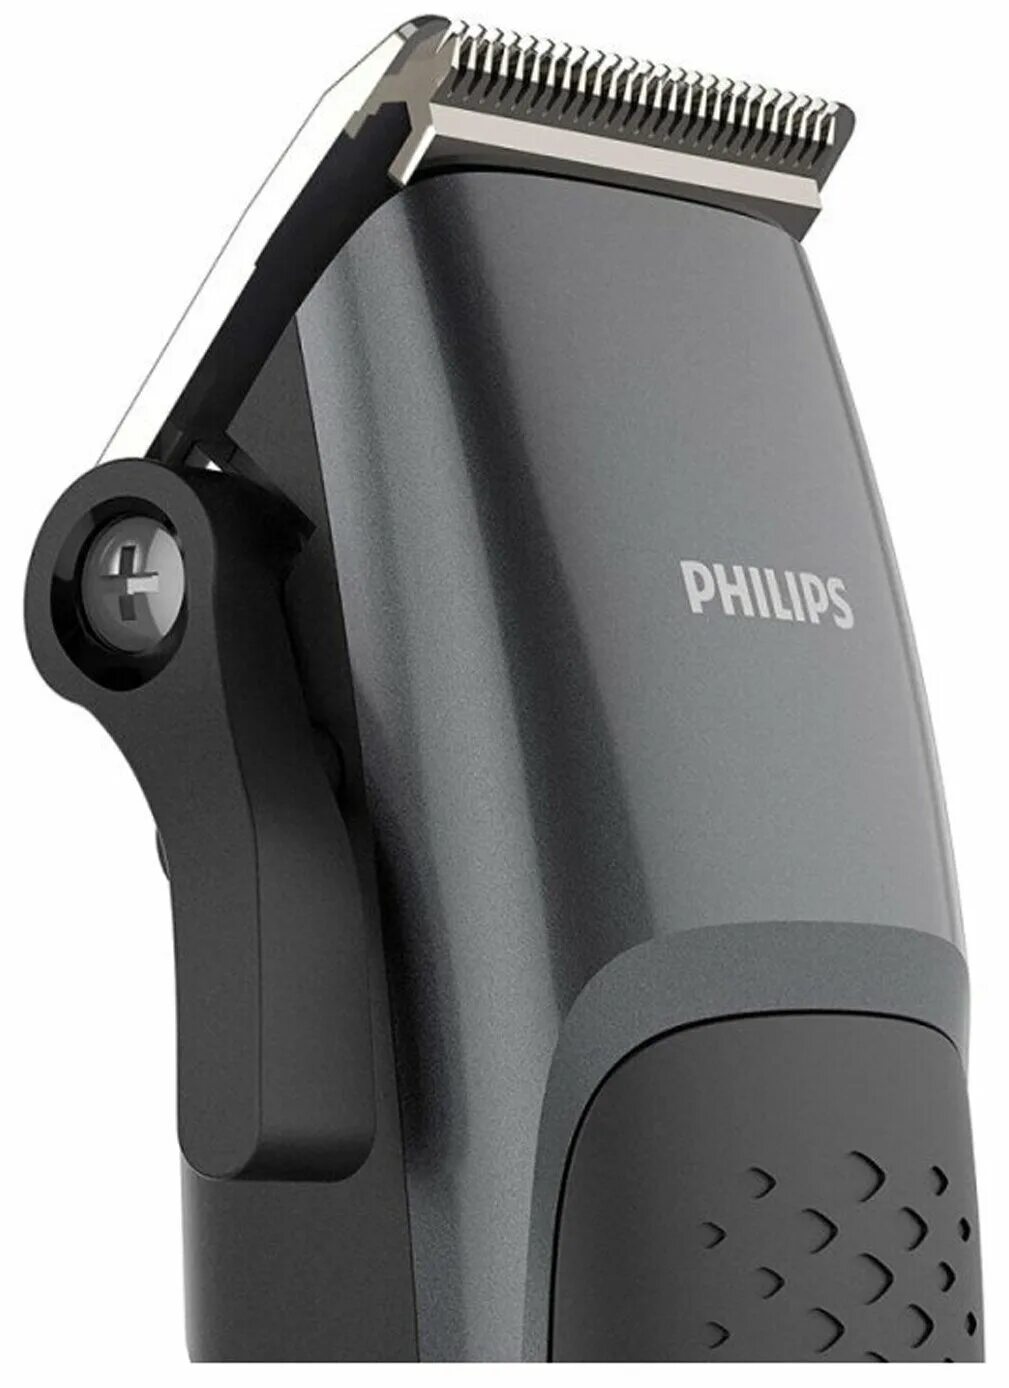 Philips 3000 машинка. Philips hair Clipper 3000. Машинка для стрижки Philips hair Clipper 3000. Philips hc3100. Philips hc3100/13.